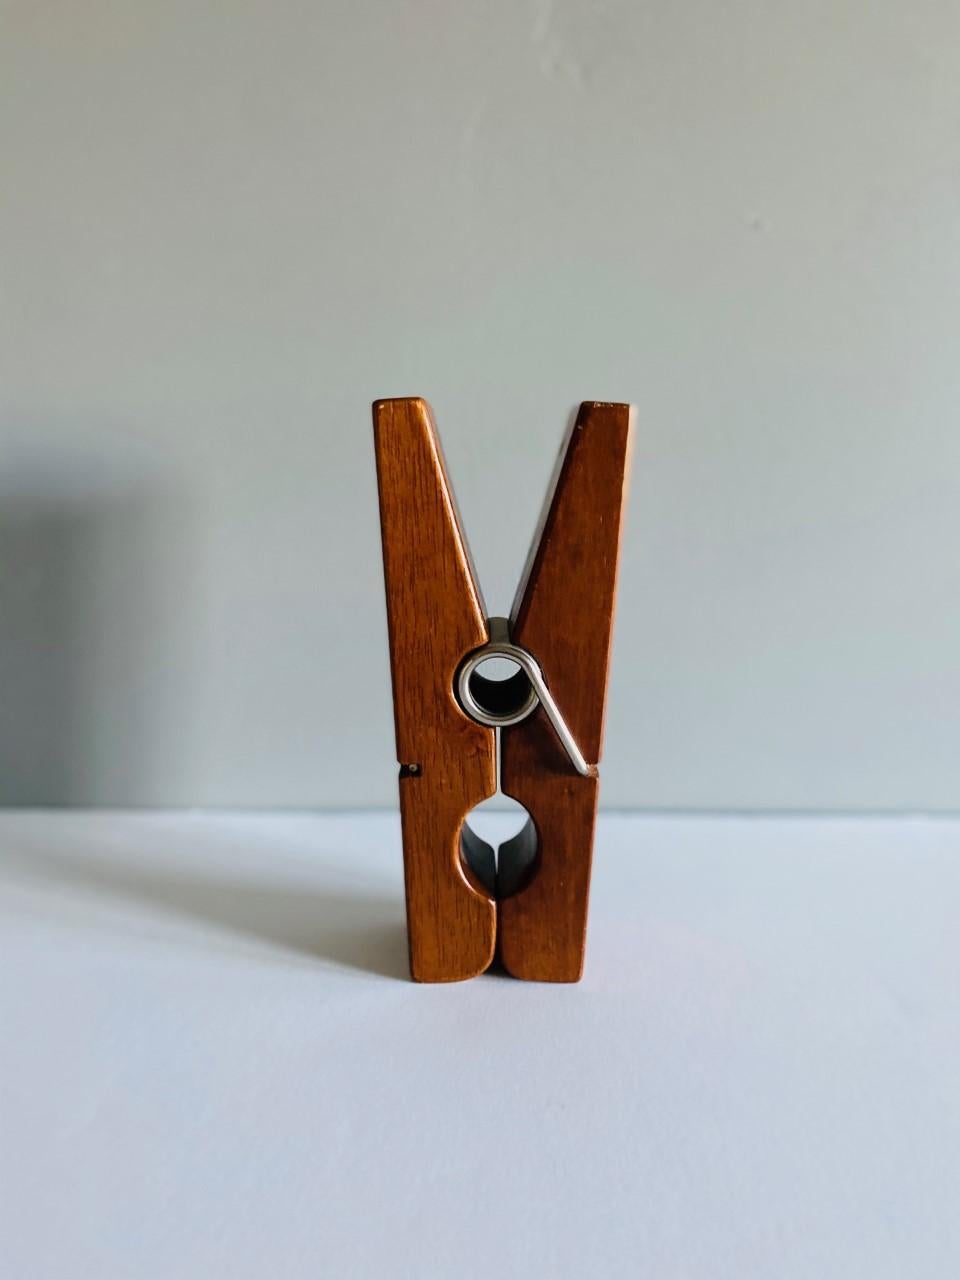 American Midcentury Vintage Teak Wooden Clothespin